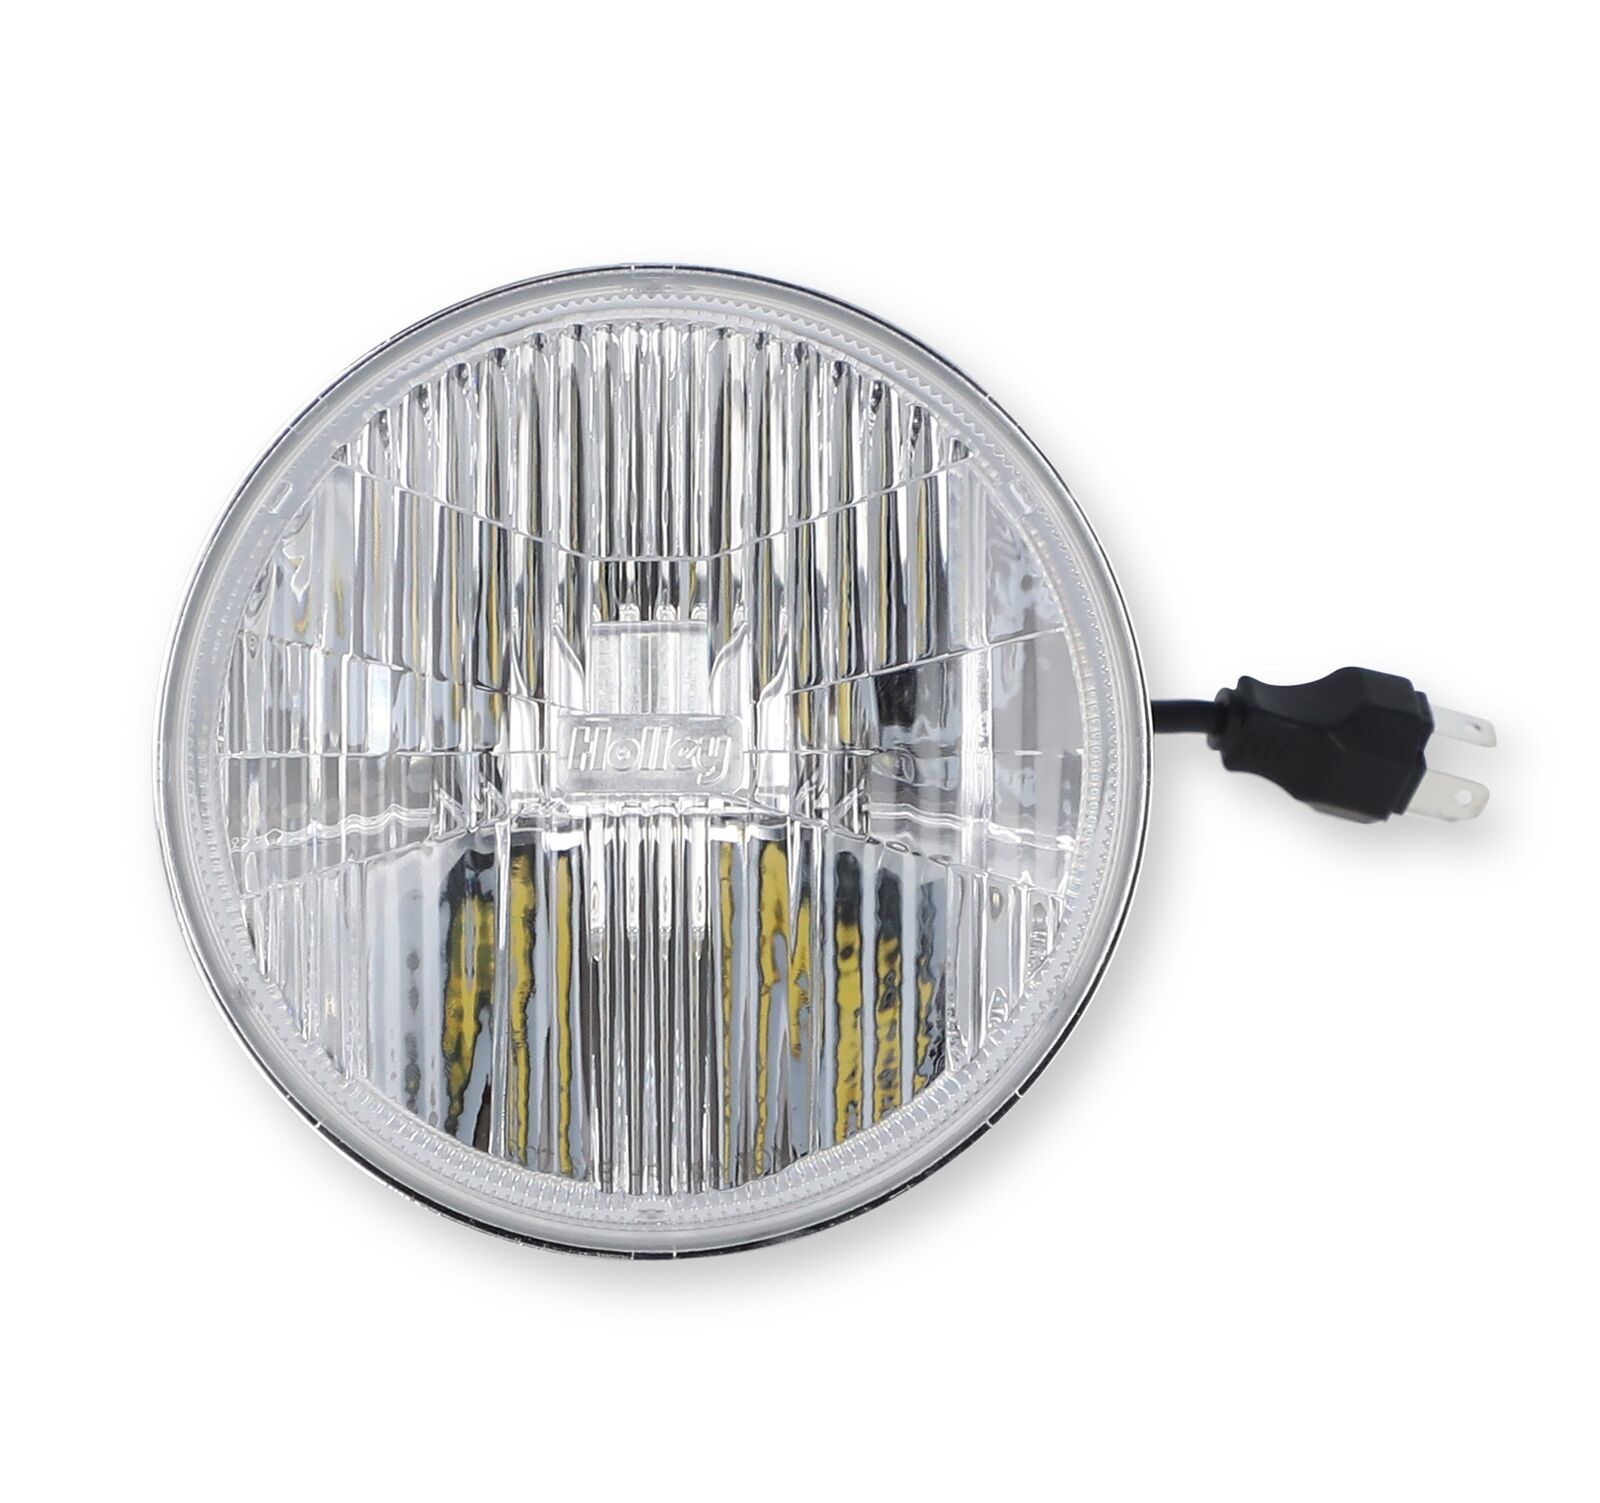 Holley RetroBright LFRB145 Hi/Low LED Headlight 5.75 in Modern White (5700K)